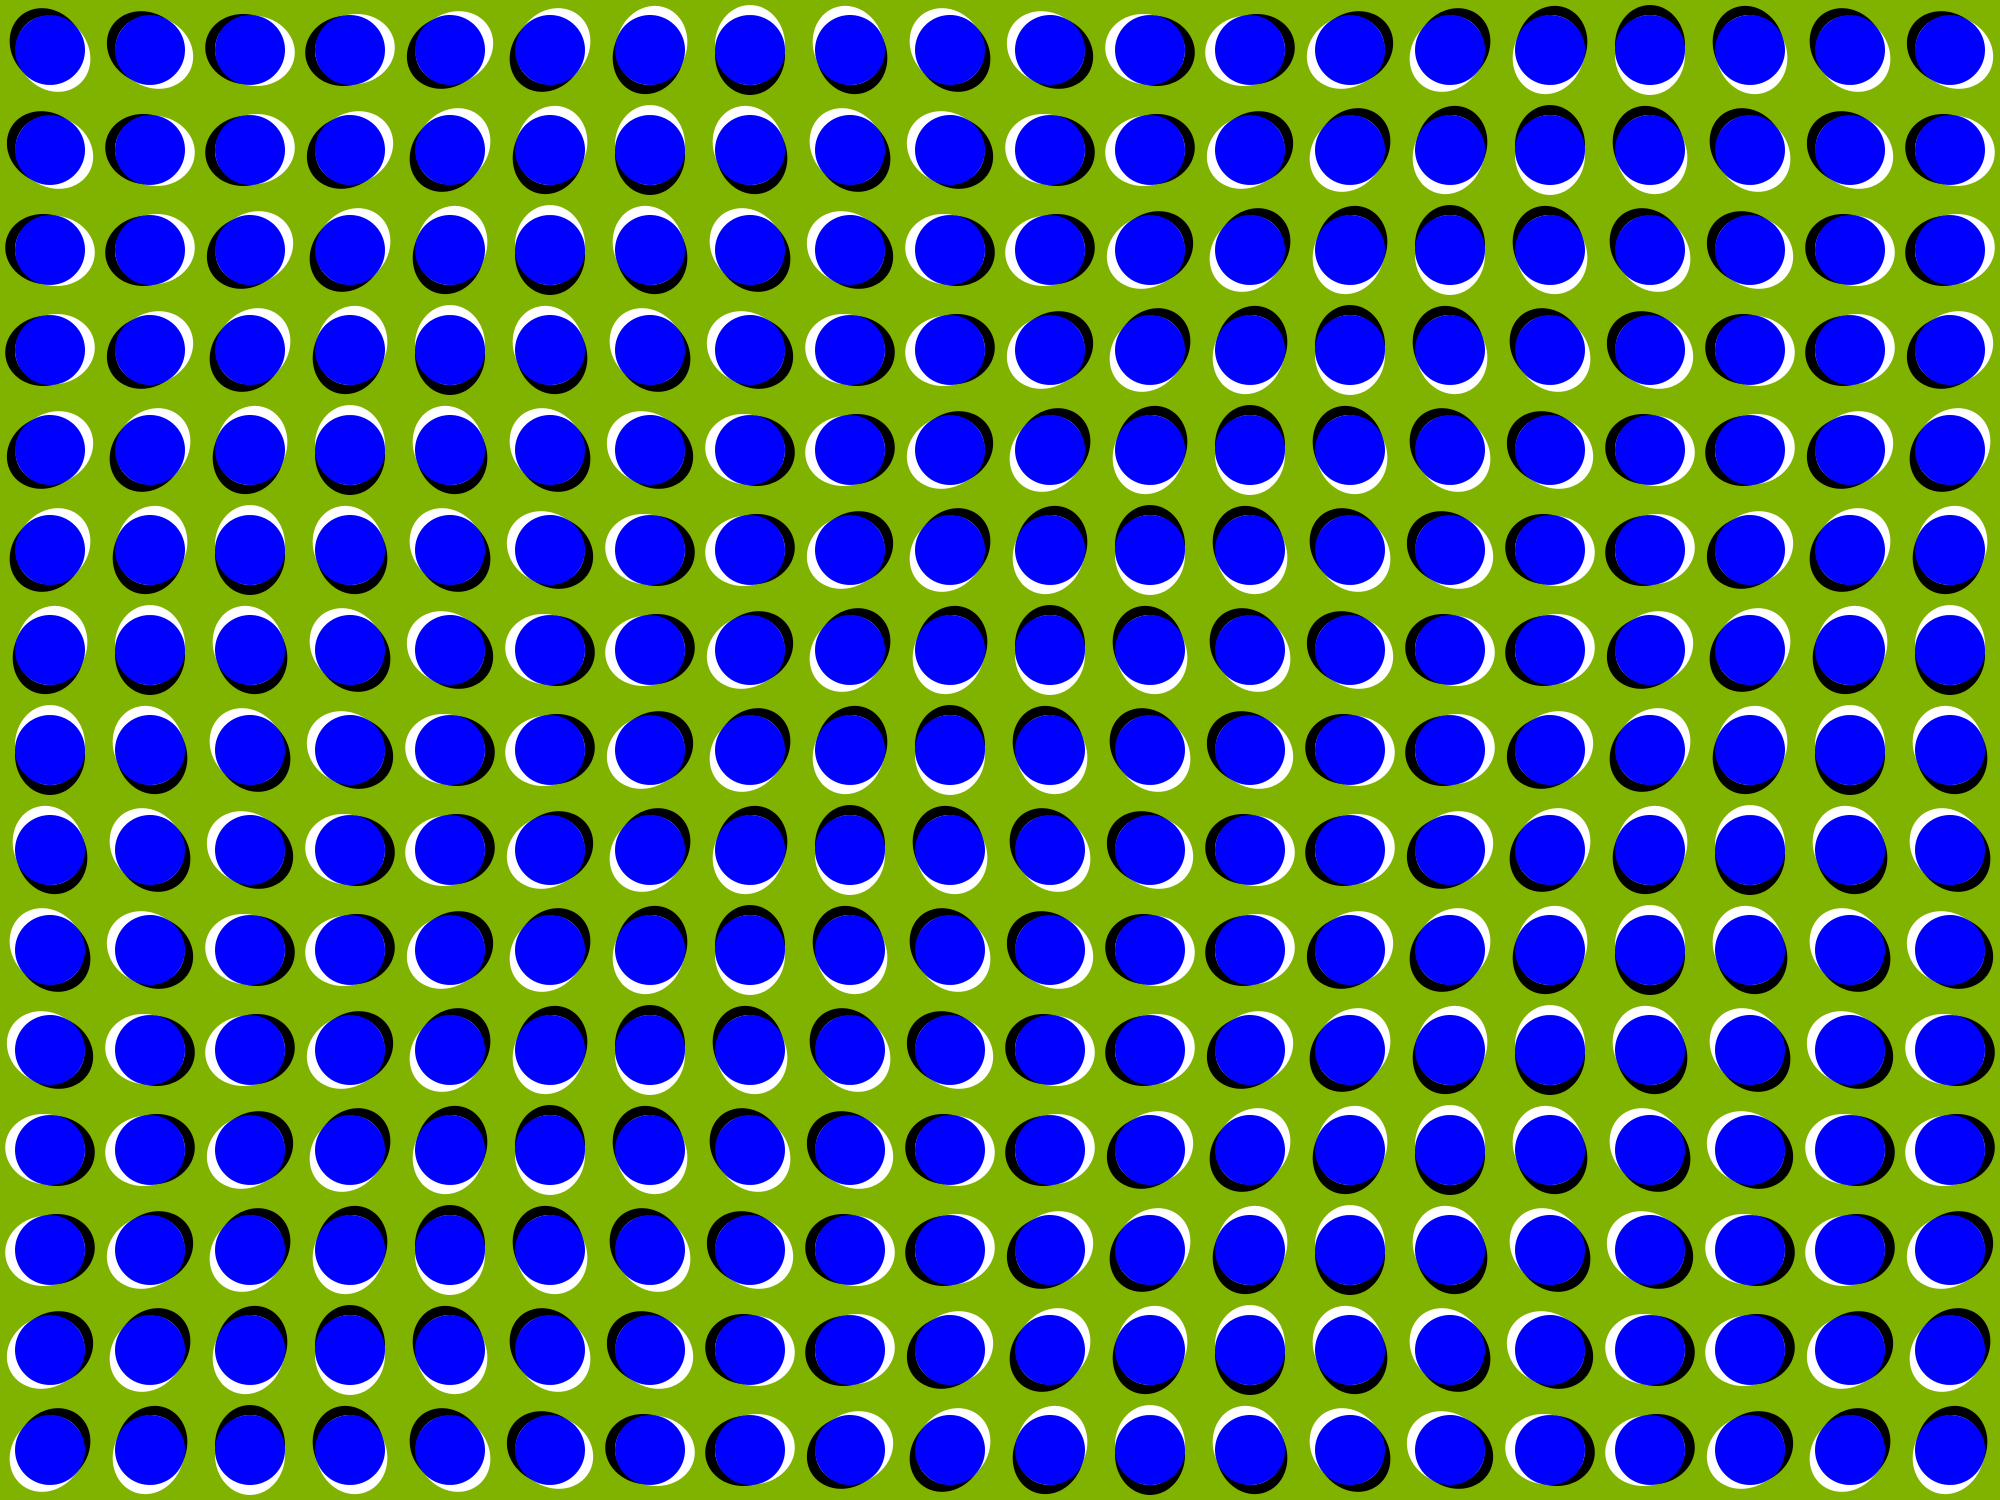 Anomalous-Motion-Optical-Illusions-Desktop-Wallpaper.png